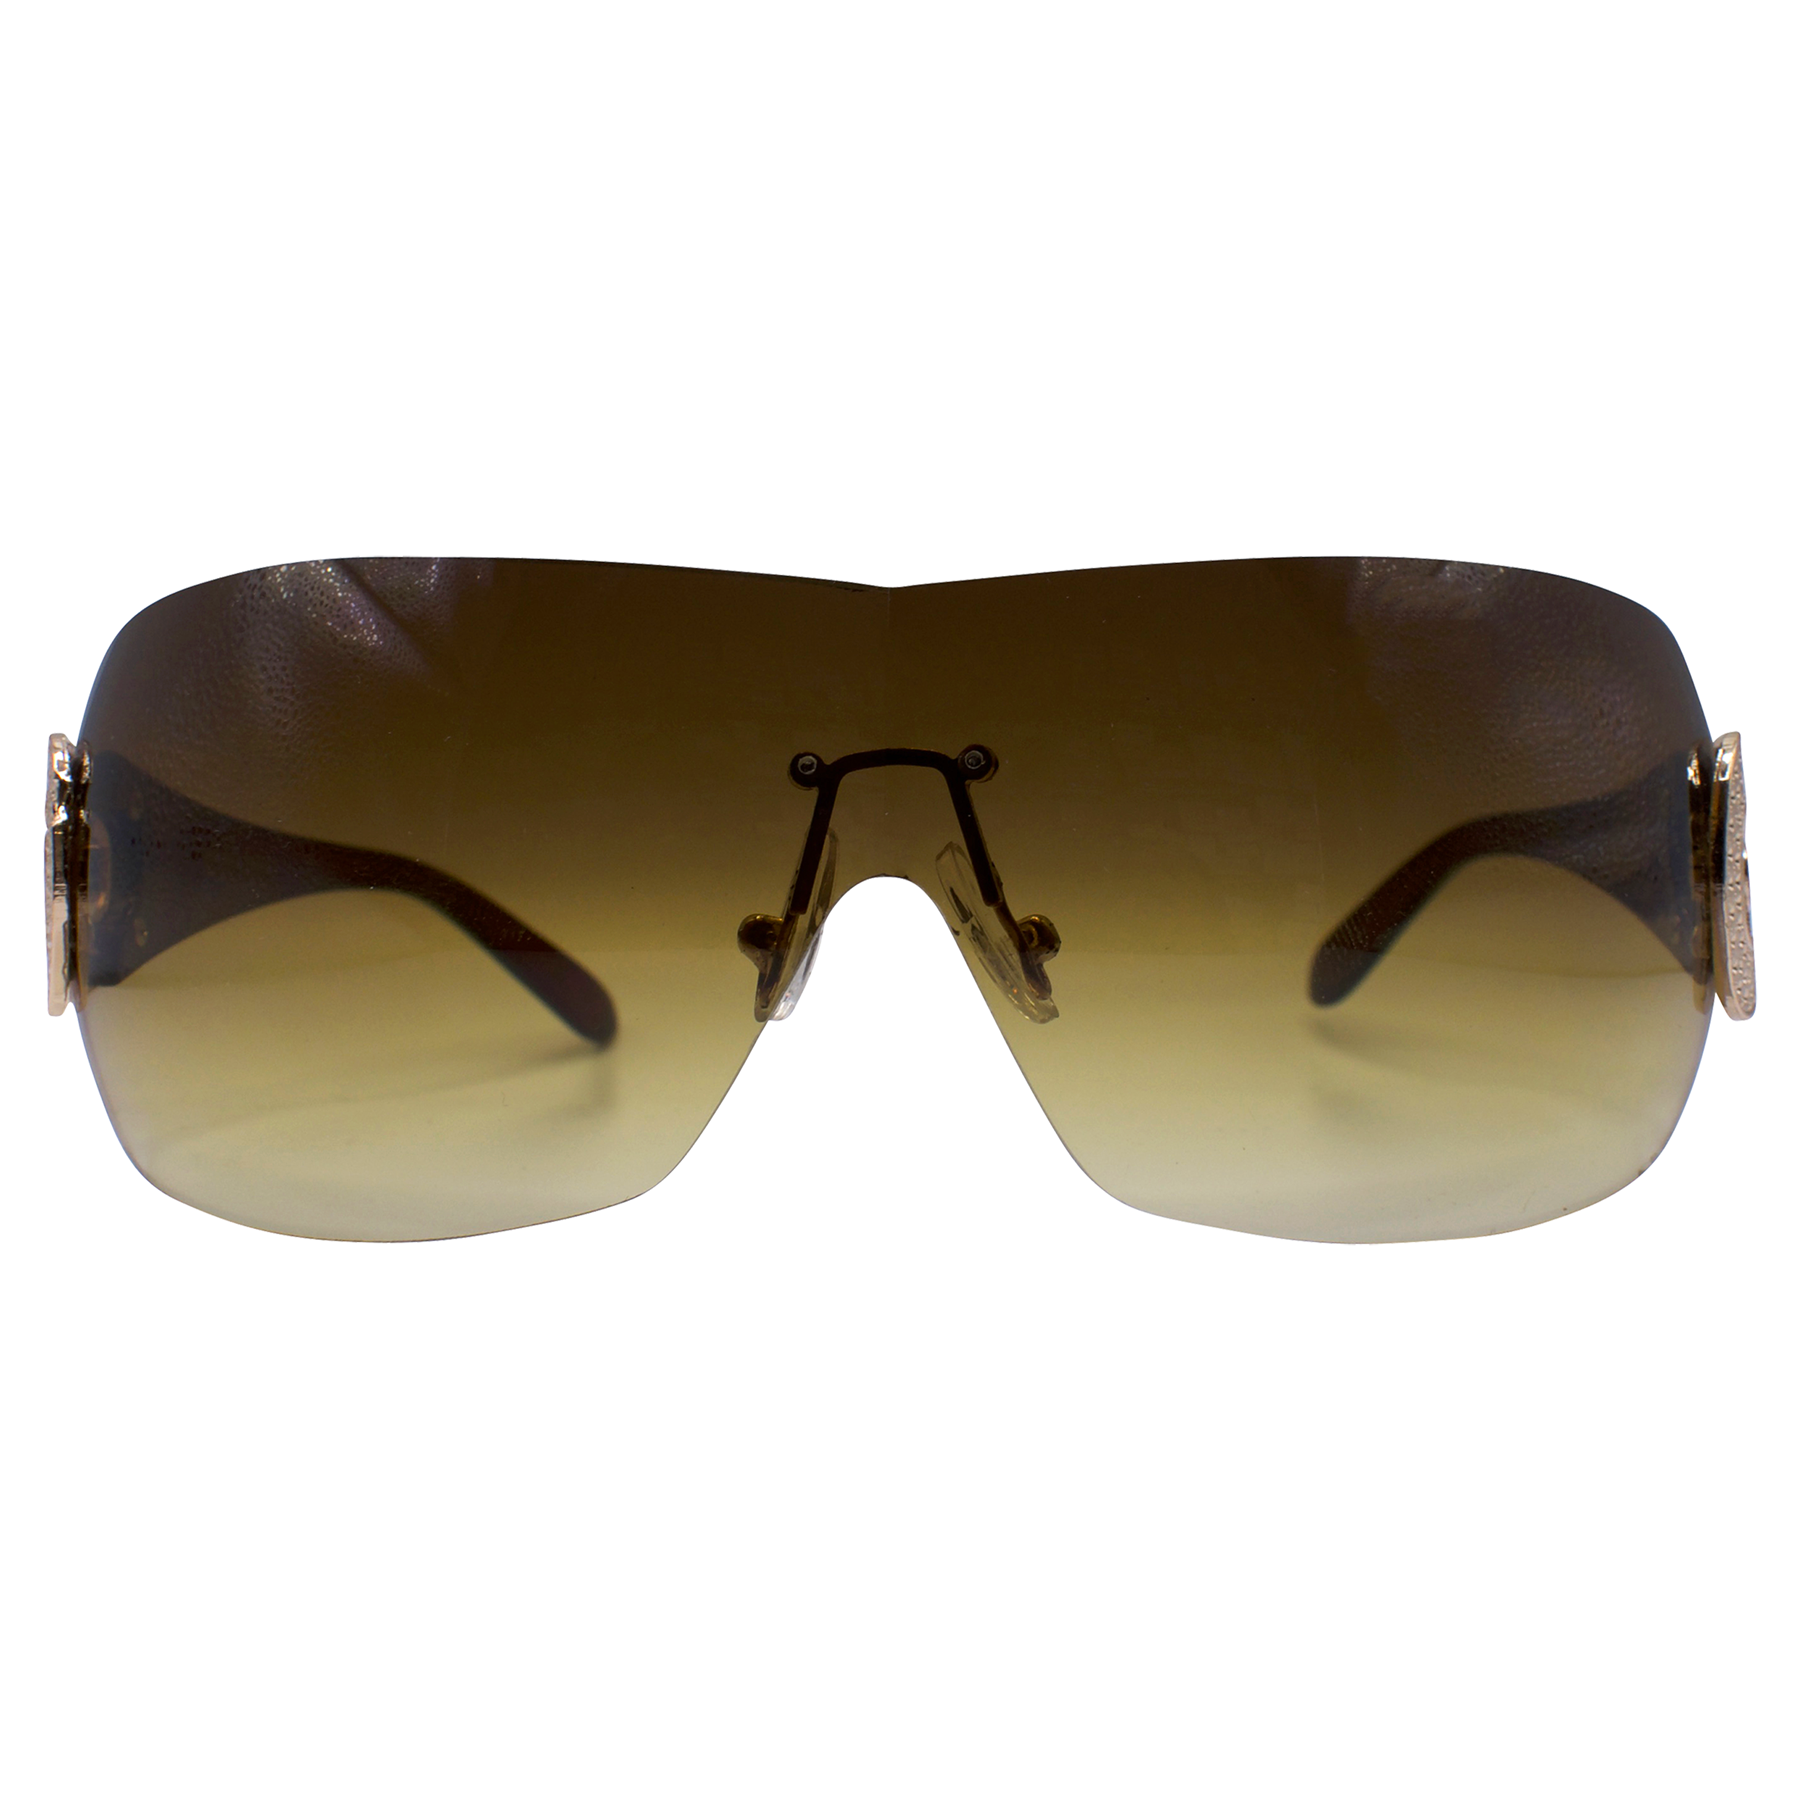 REVENGE Rimless Shield Sunglasses